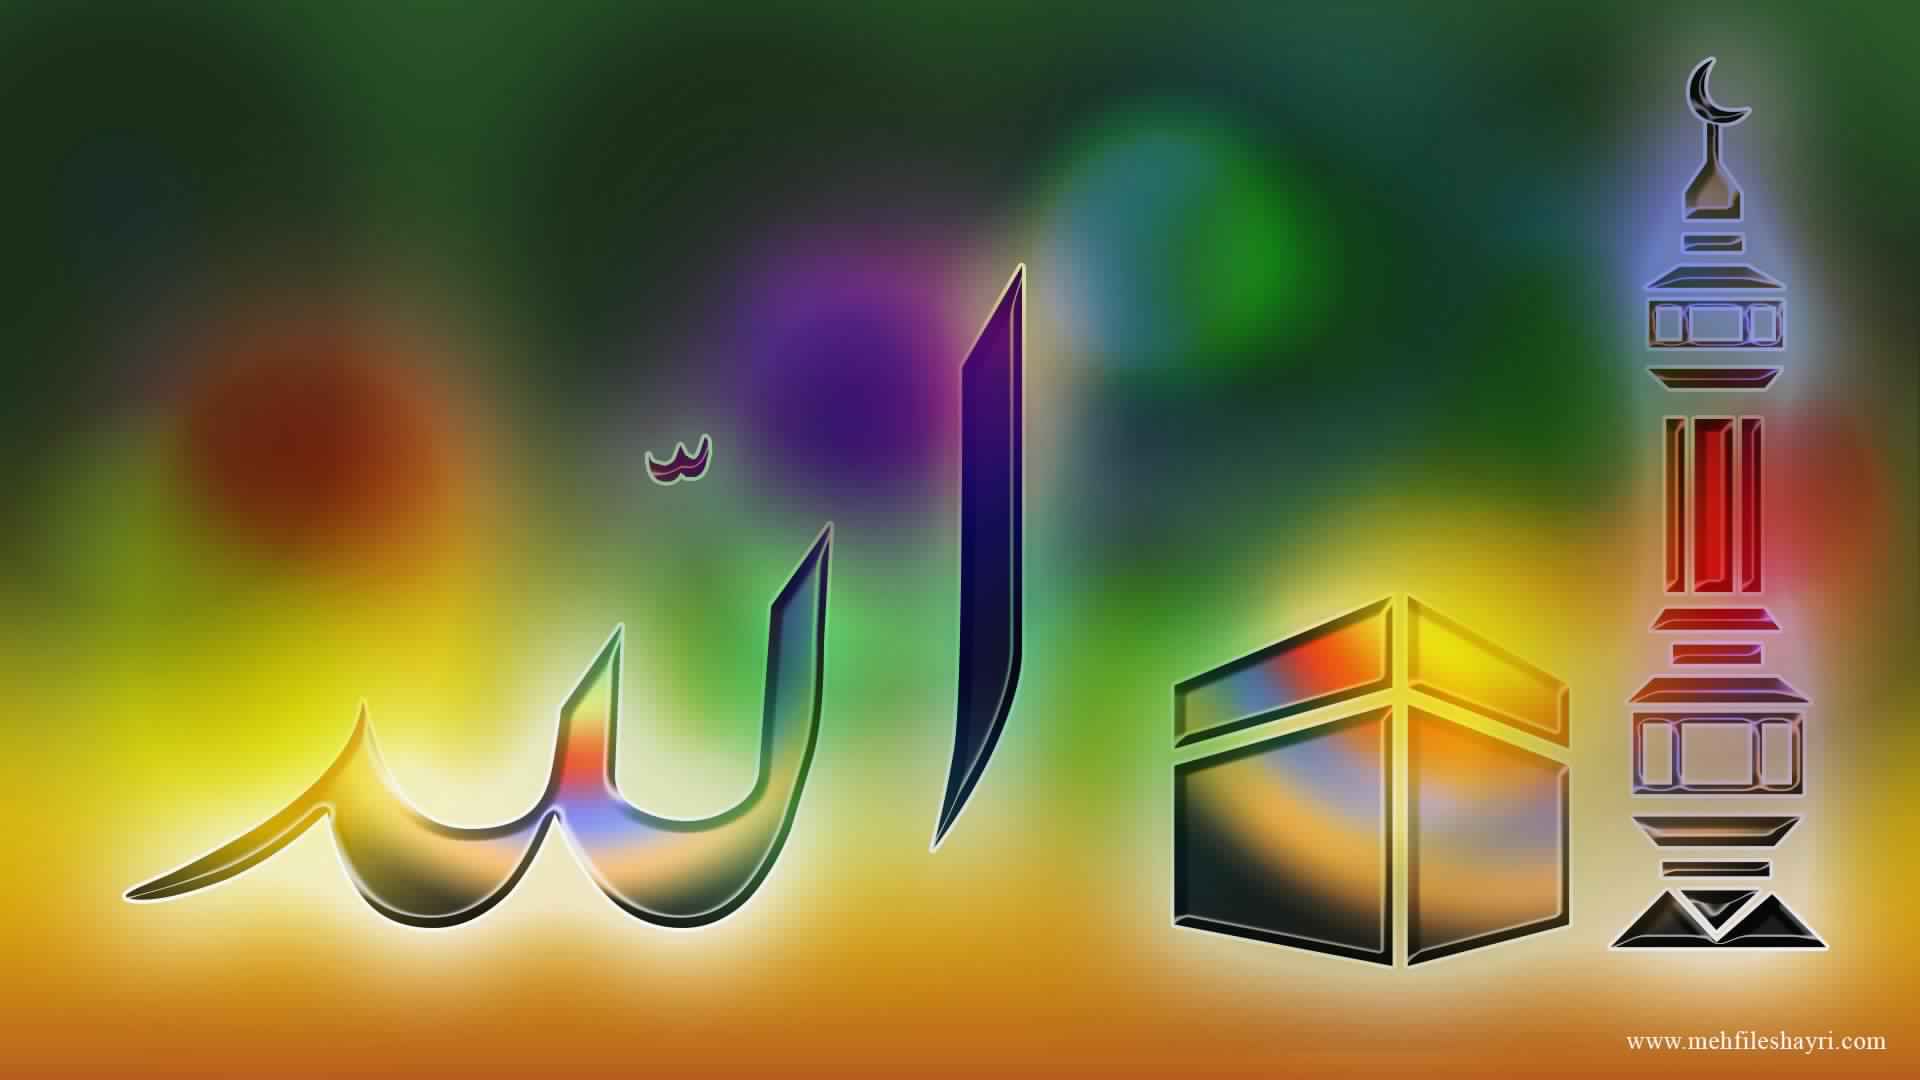 islamic wallpaper hd,graphic design,font,graphics